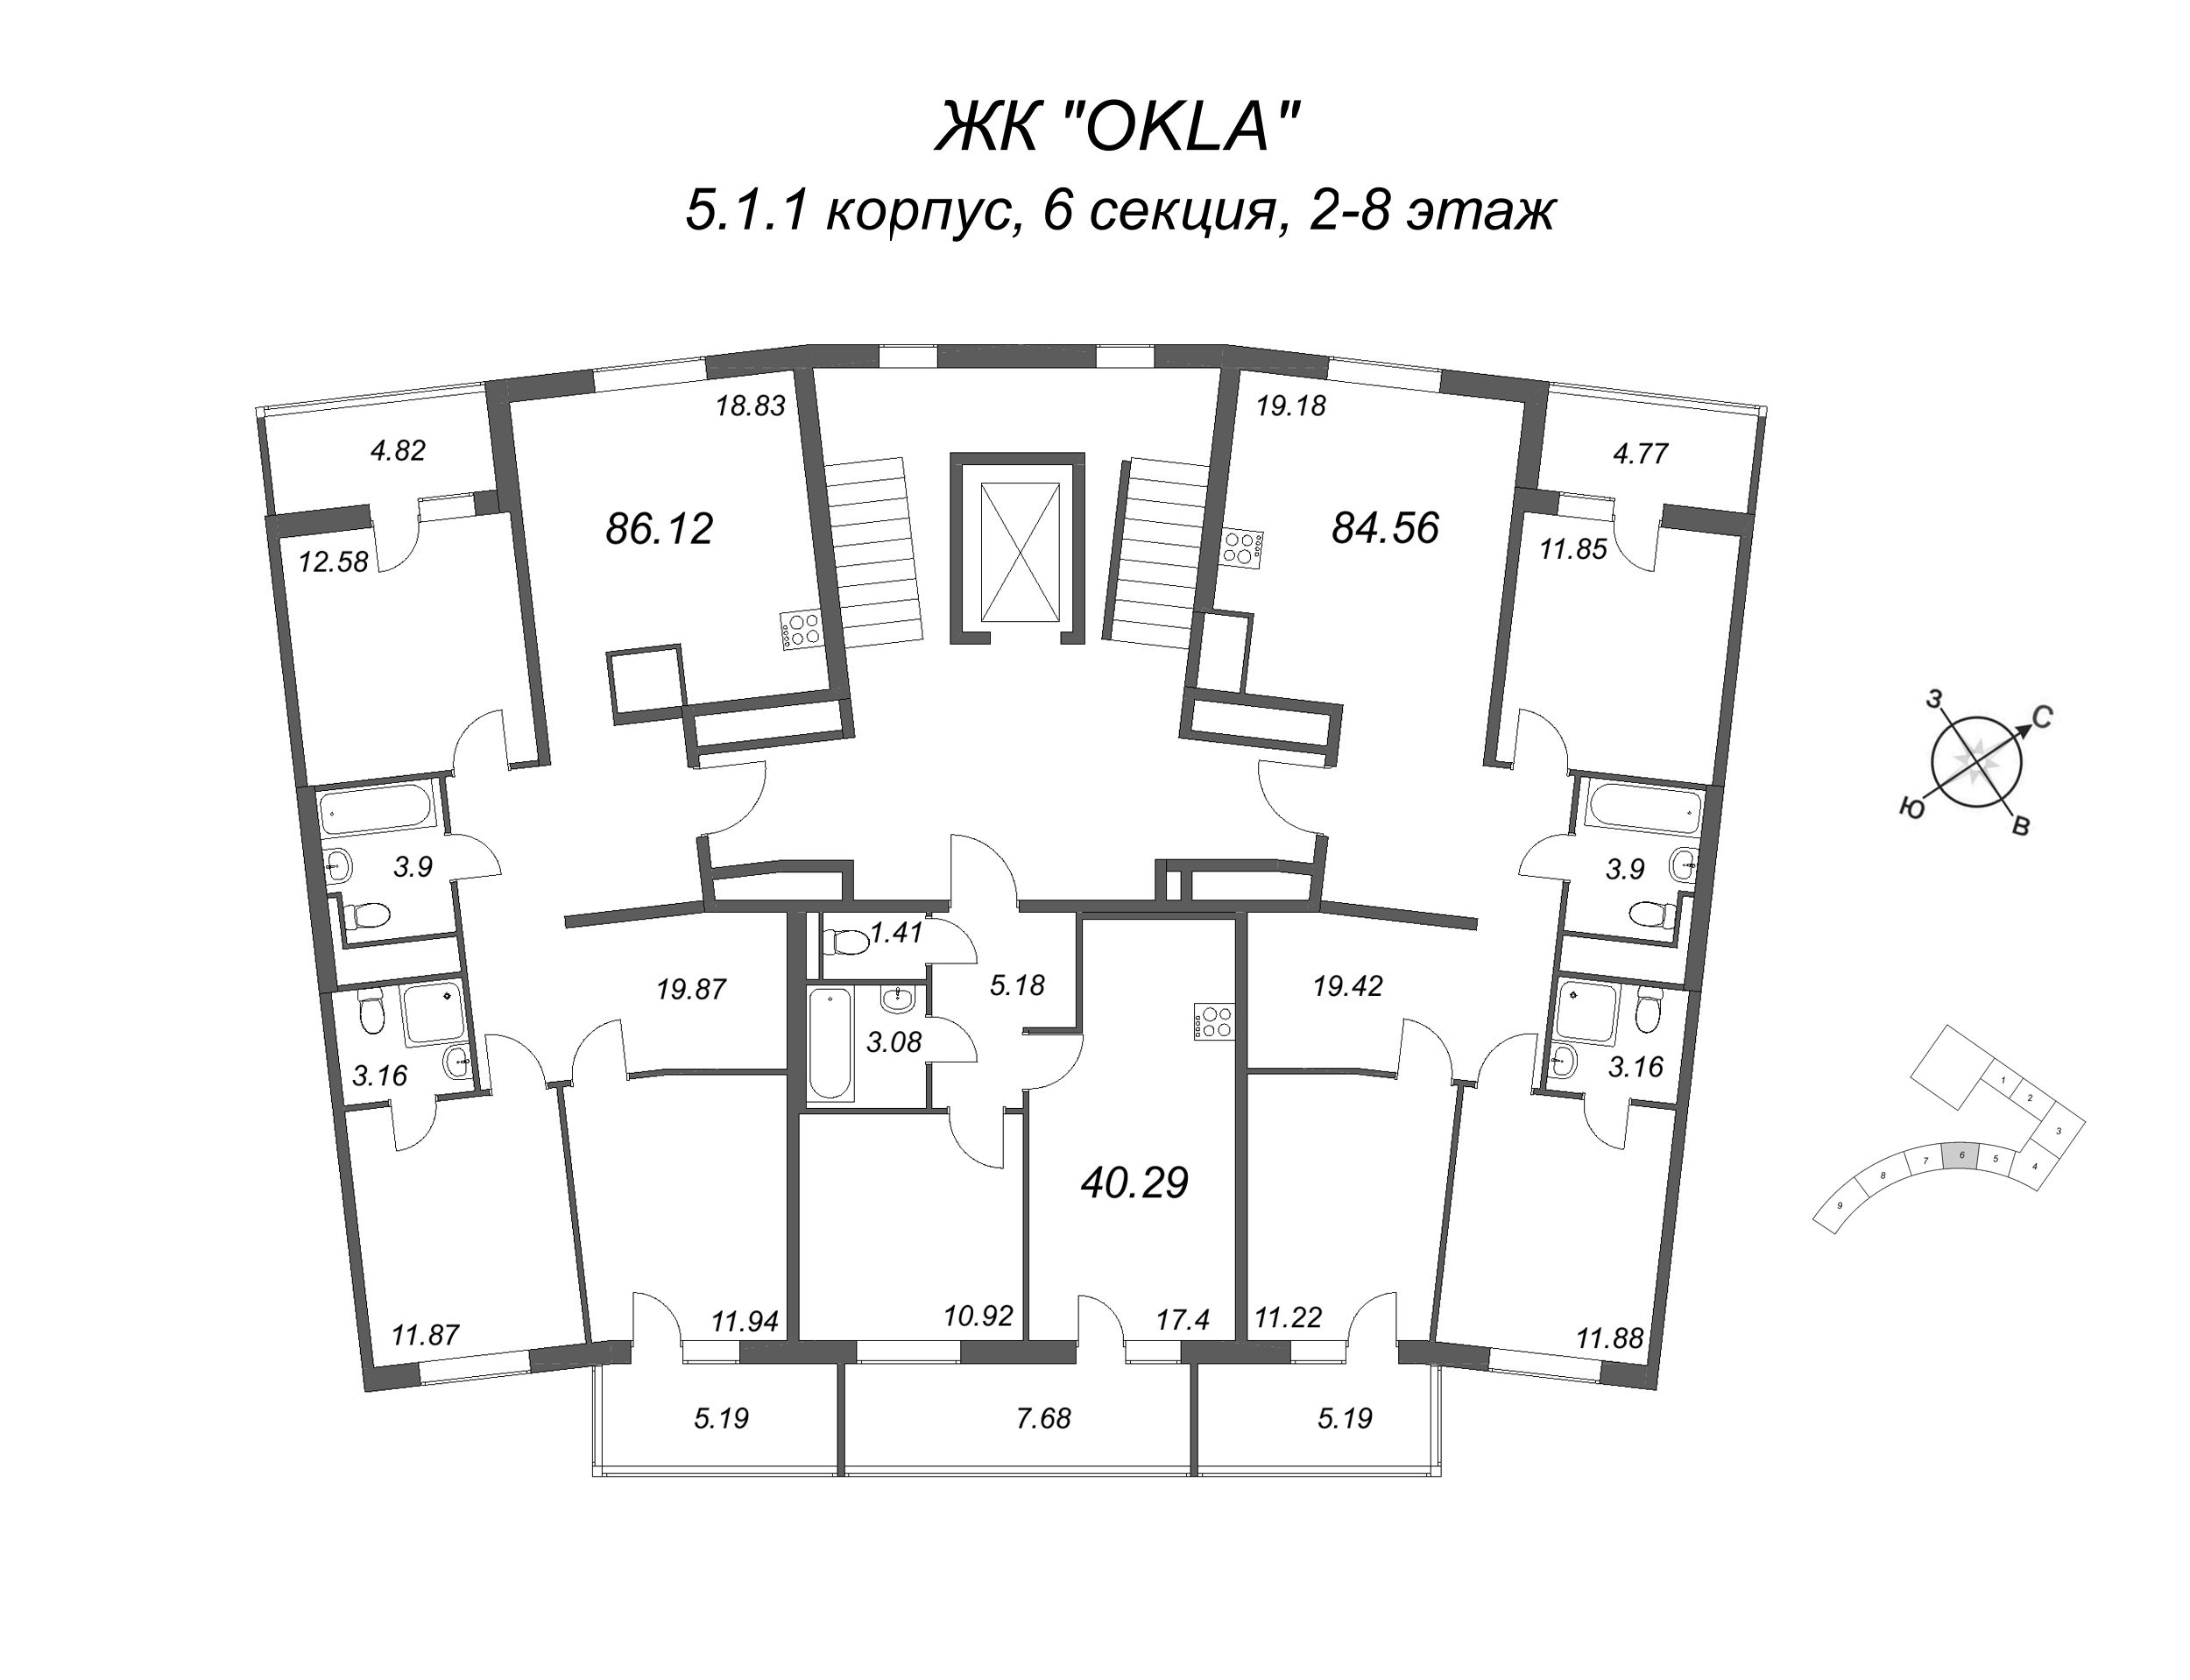 2-комнатная (Евро) квартира, 45.66 м² - планировка этажа